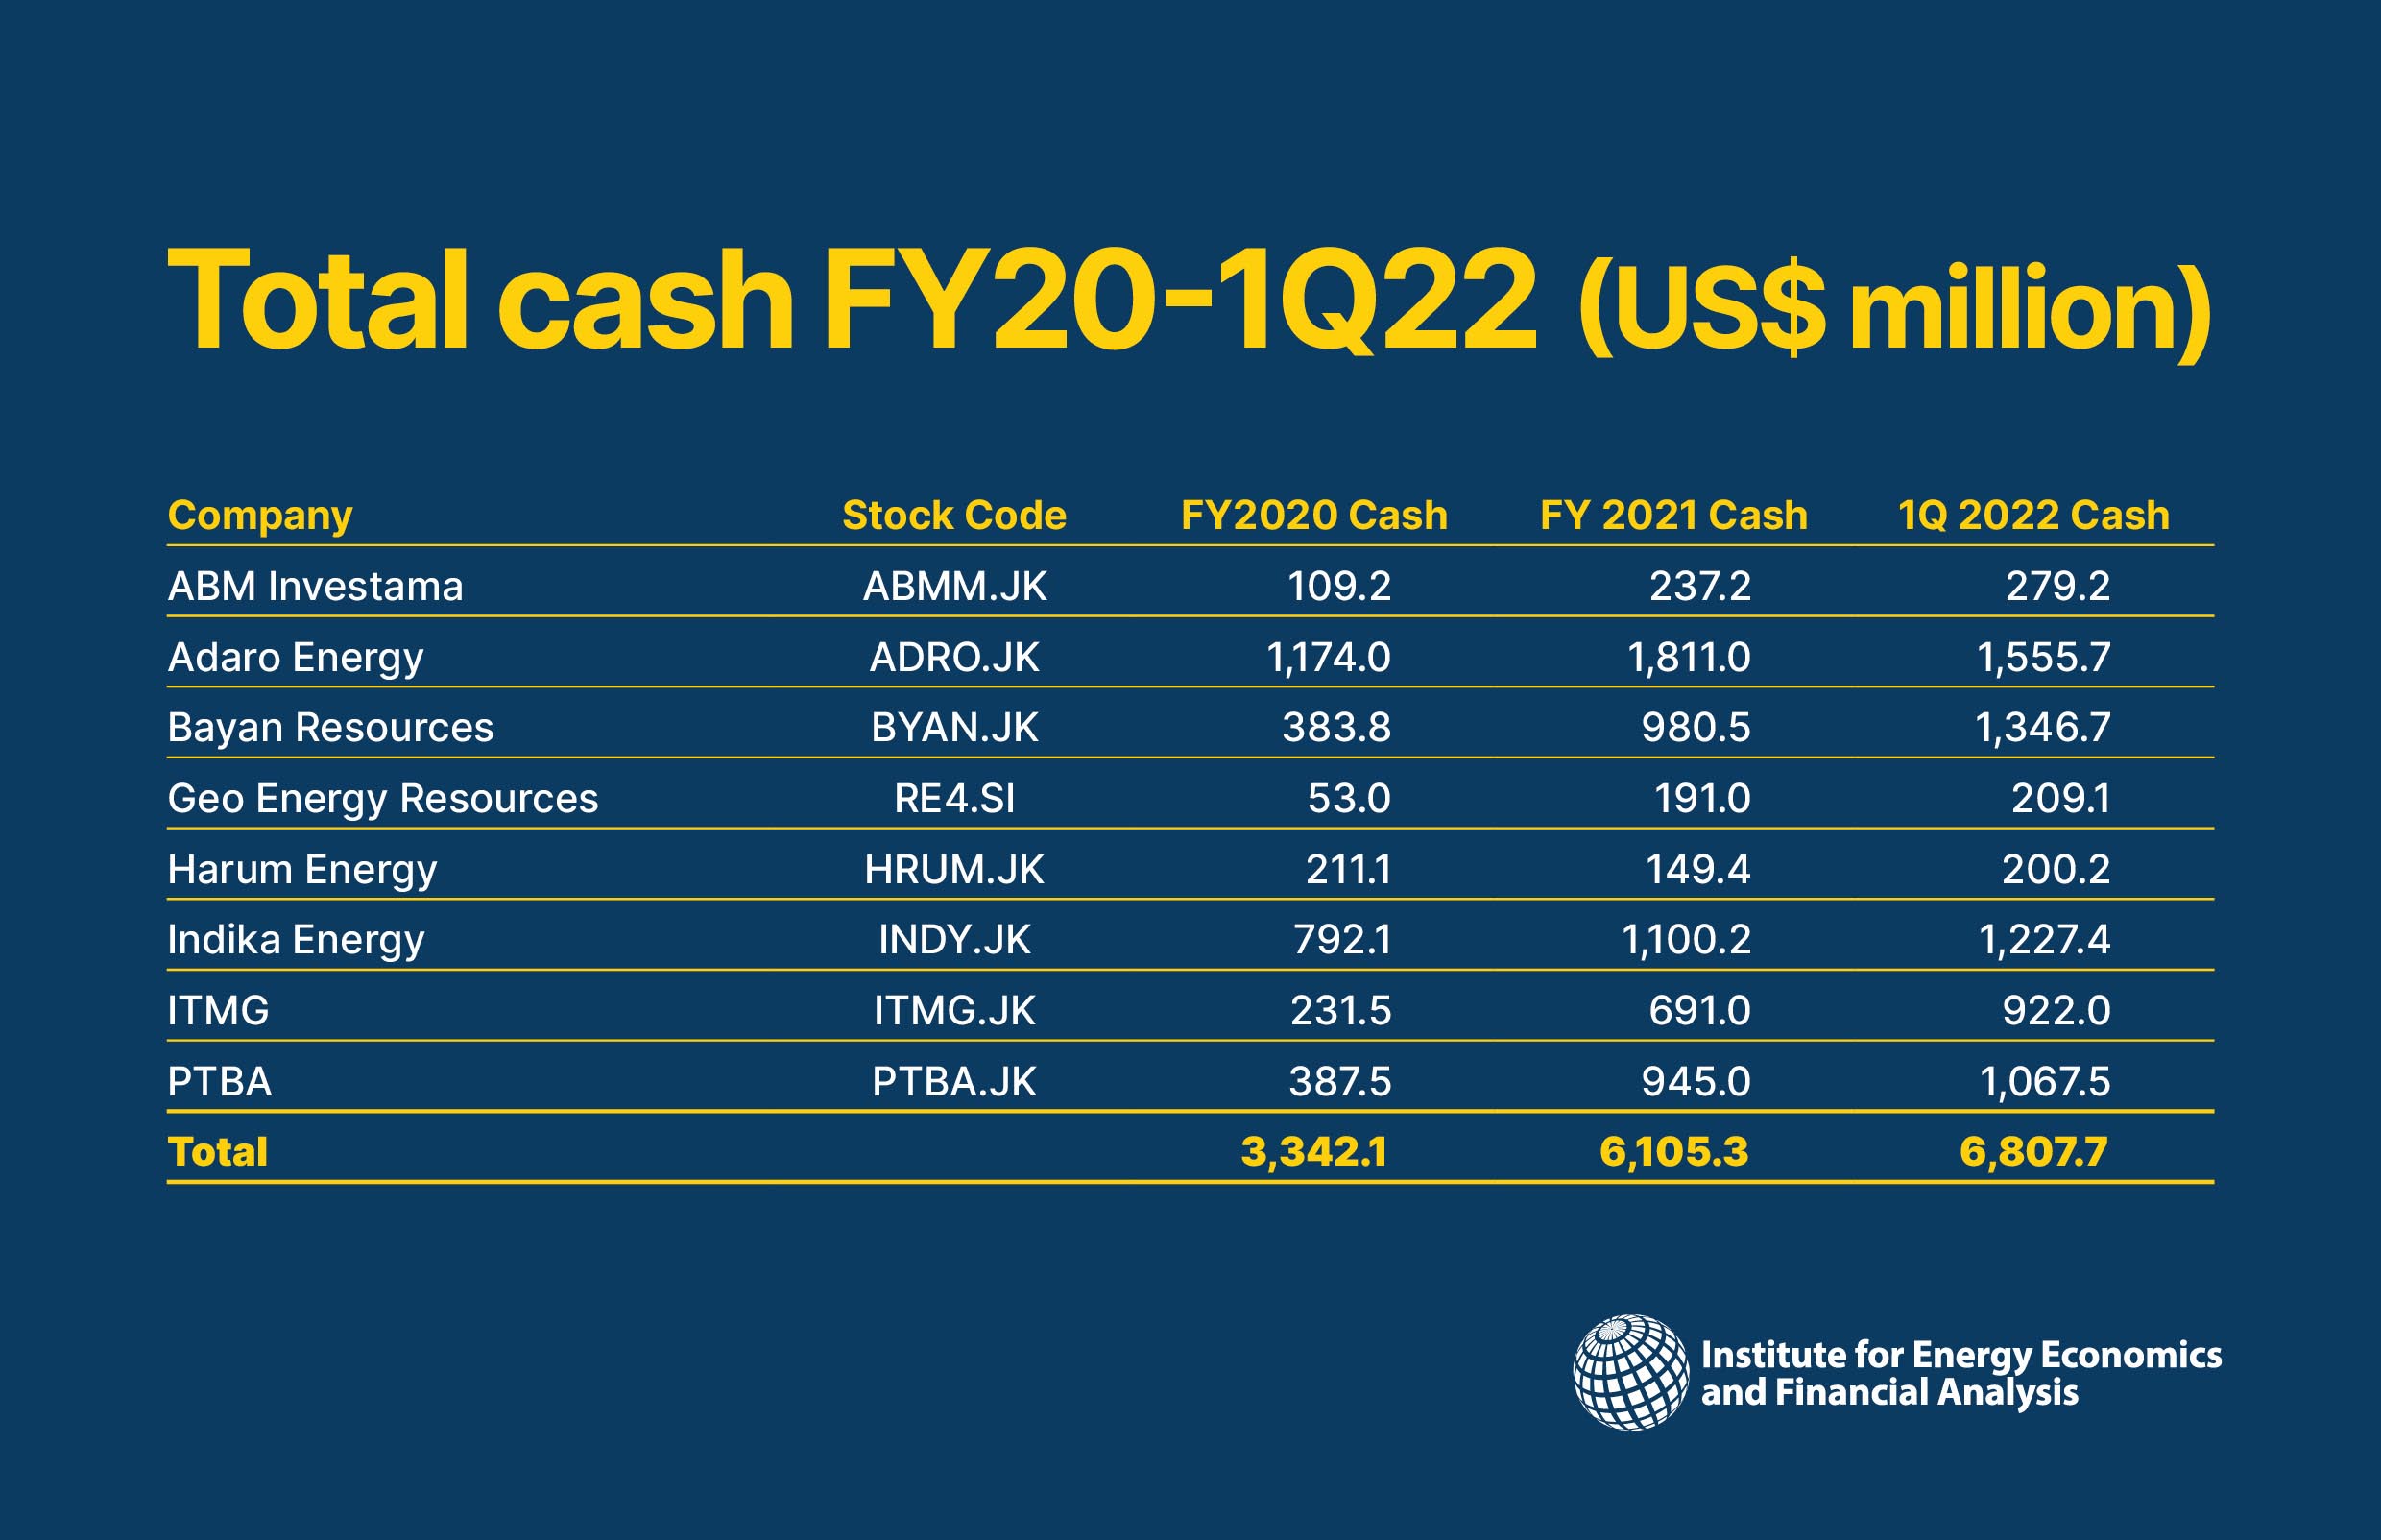 US$6.8-billion cash balance